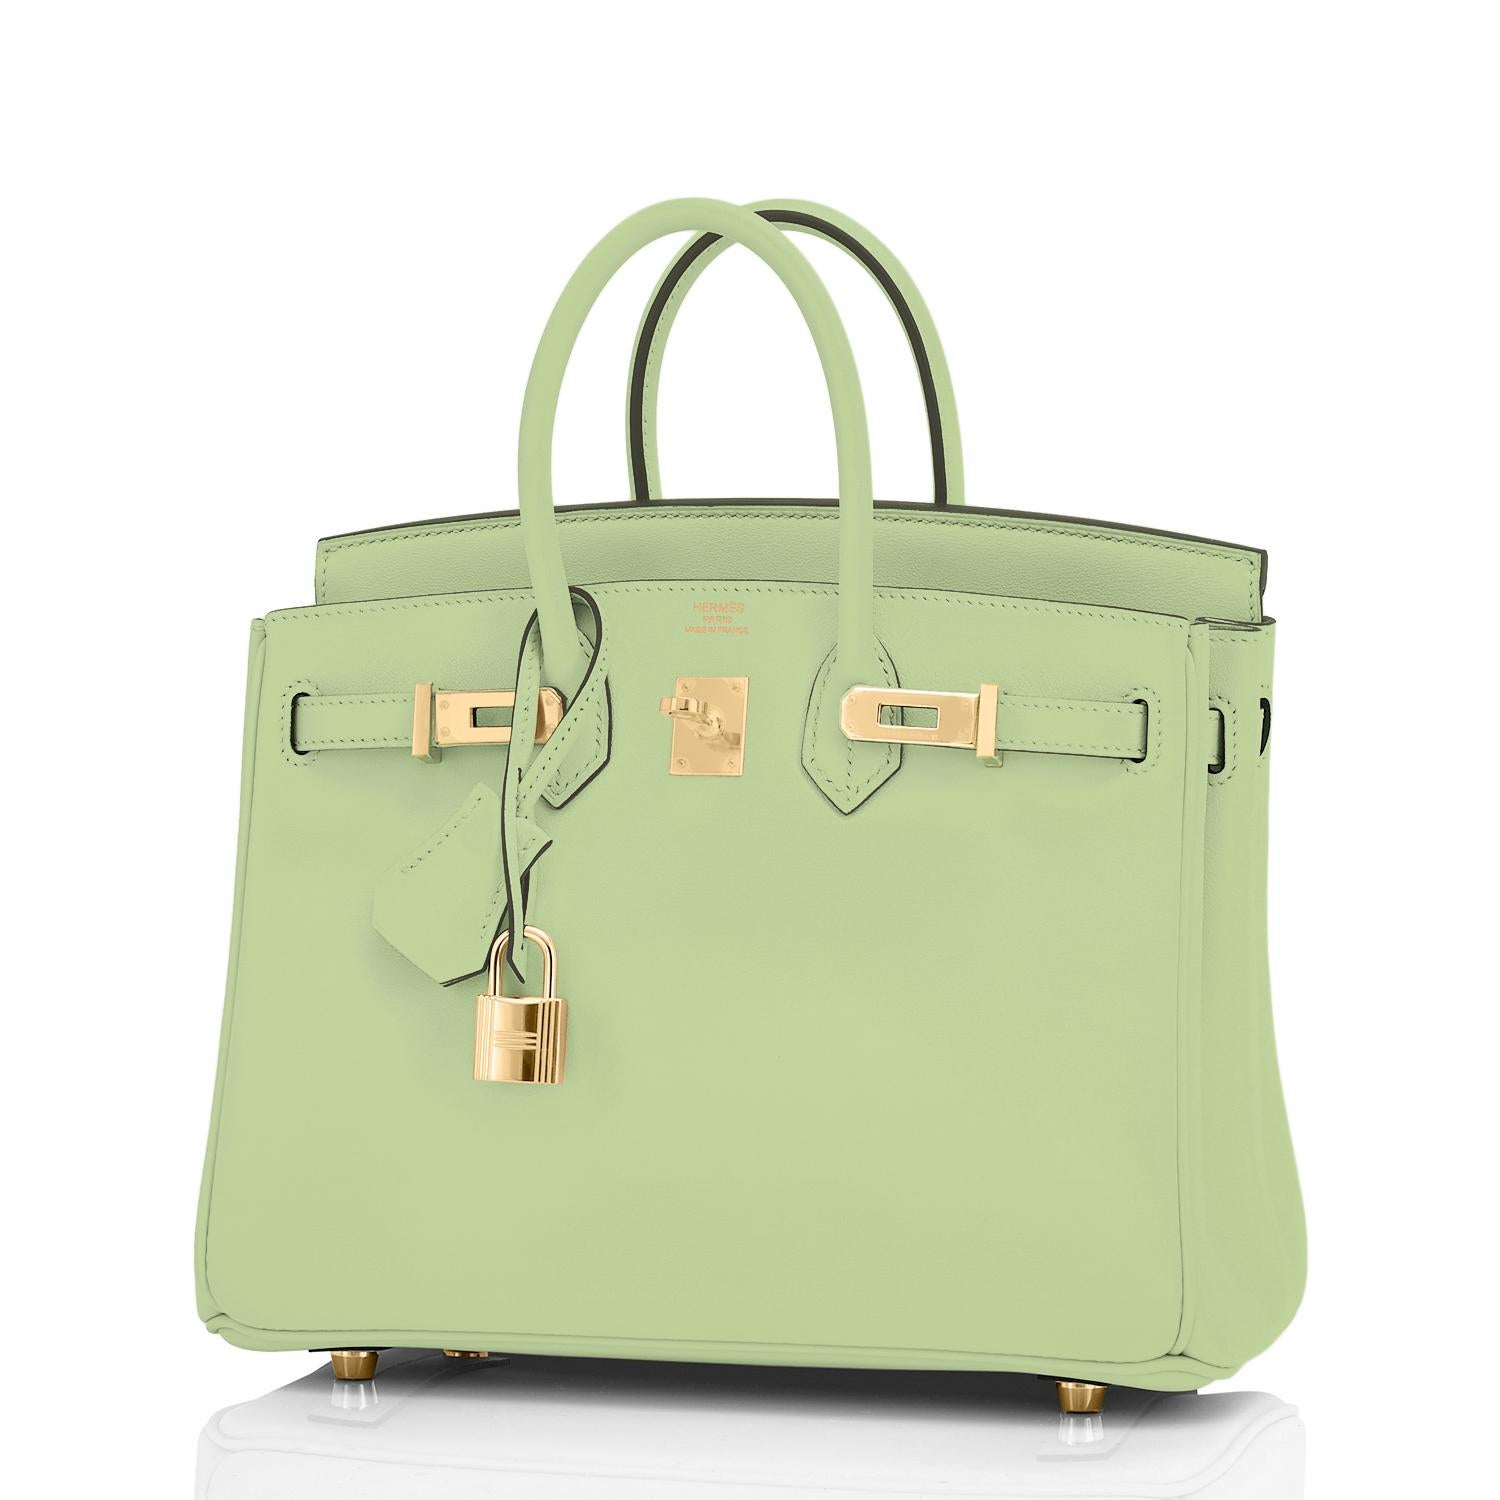 Hermes Birkin 25 Vert Criquet Chic Green Bag Gold Hardware Y Stamp, 2020 1